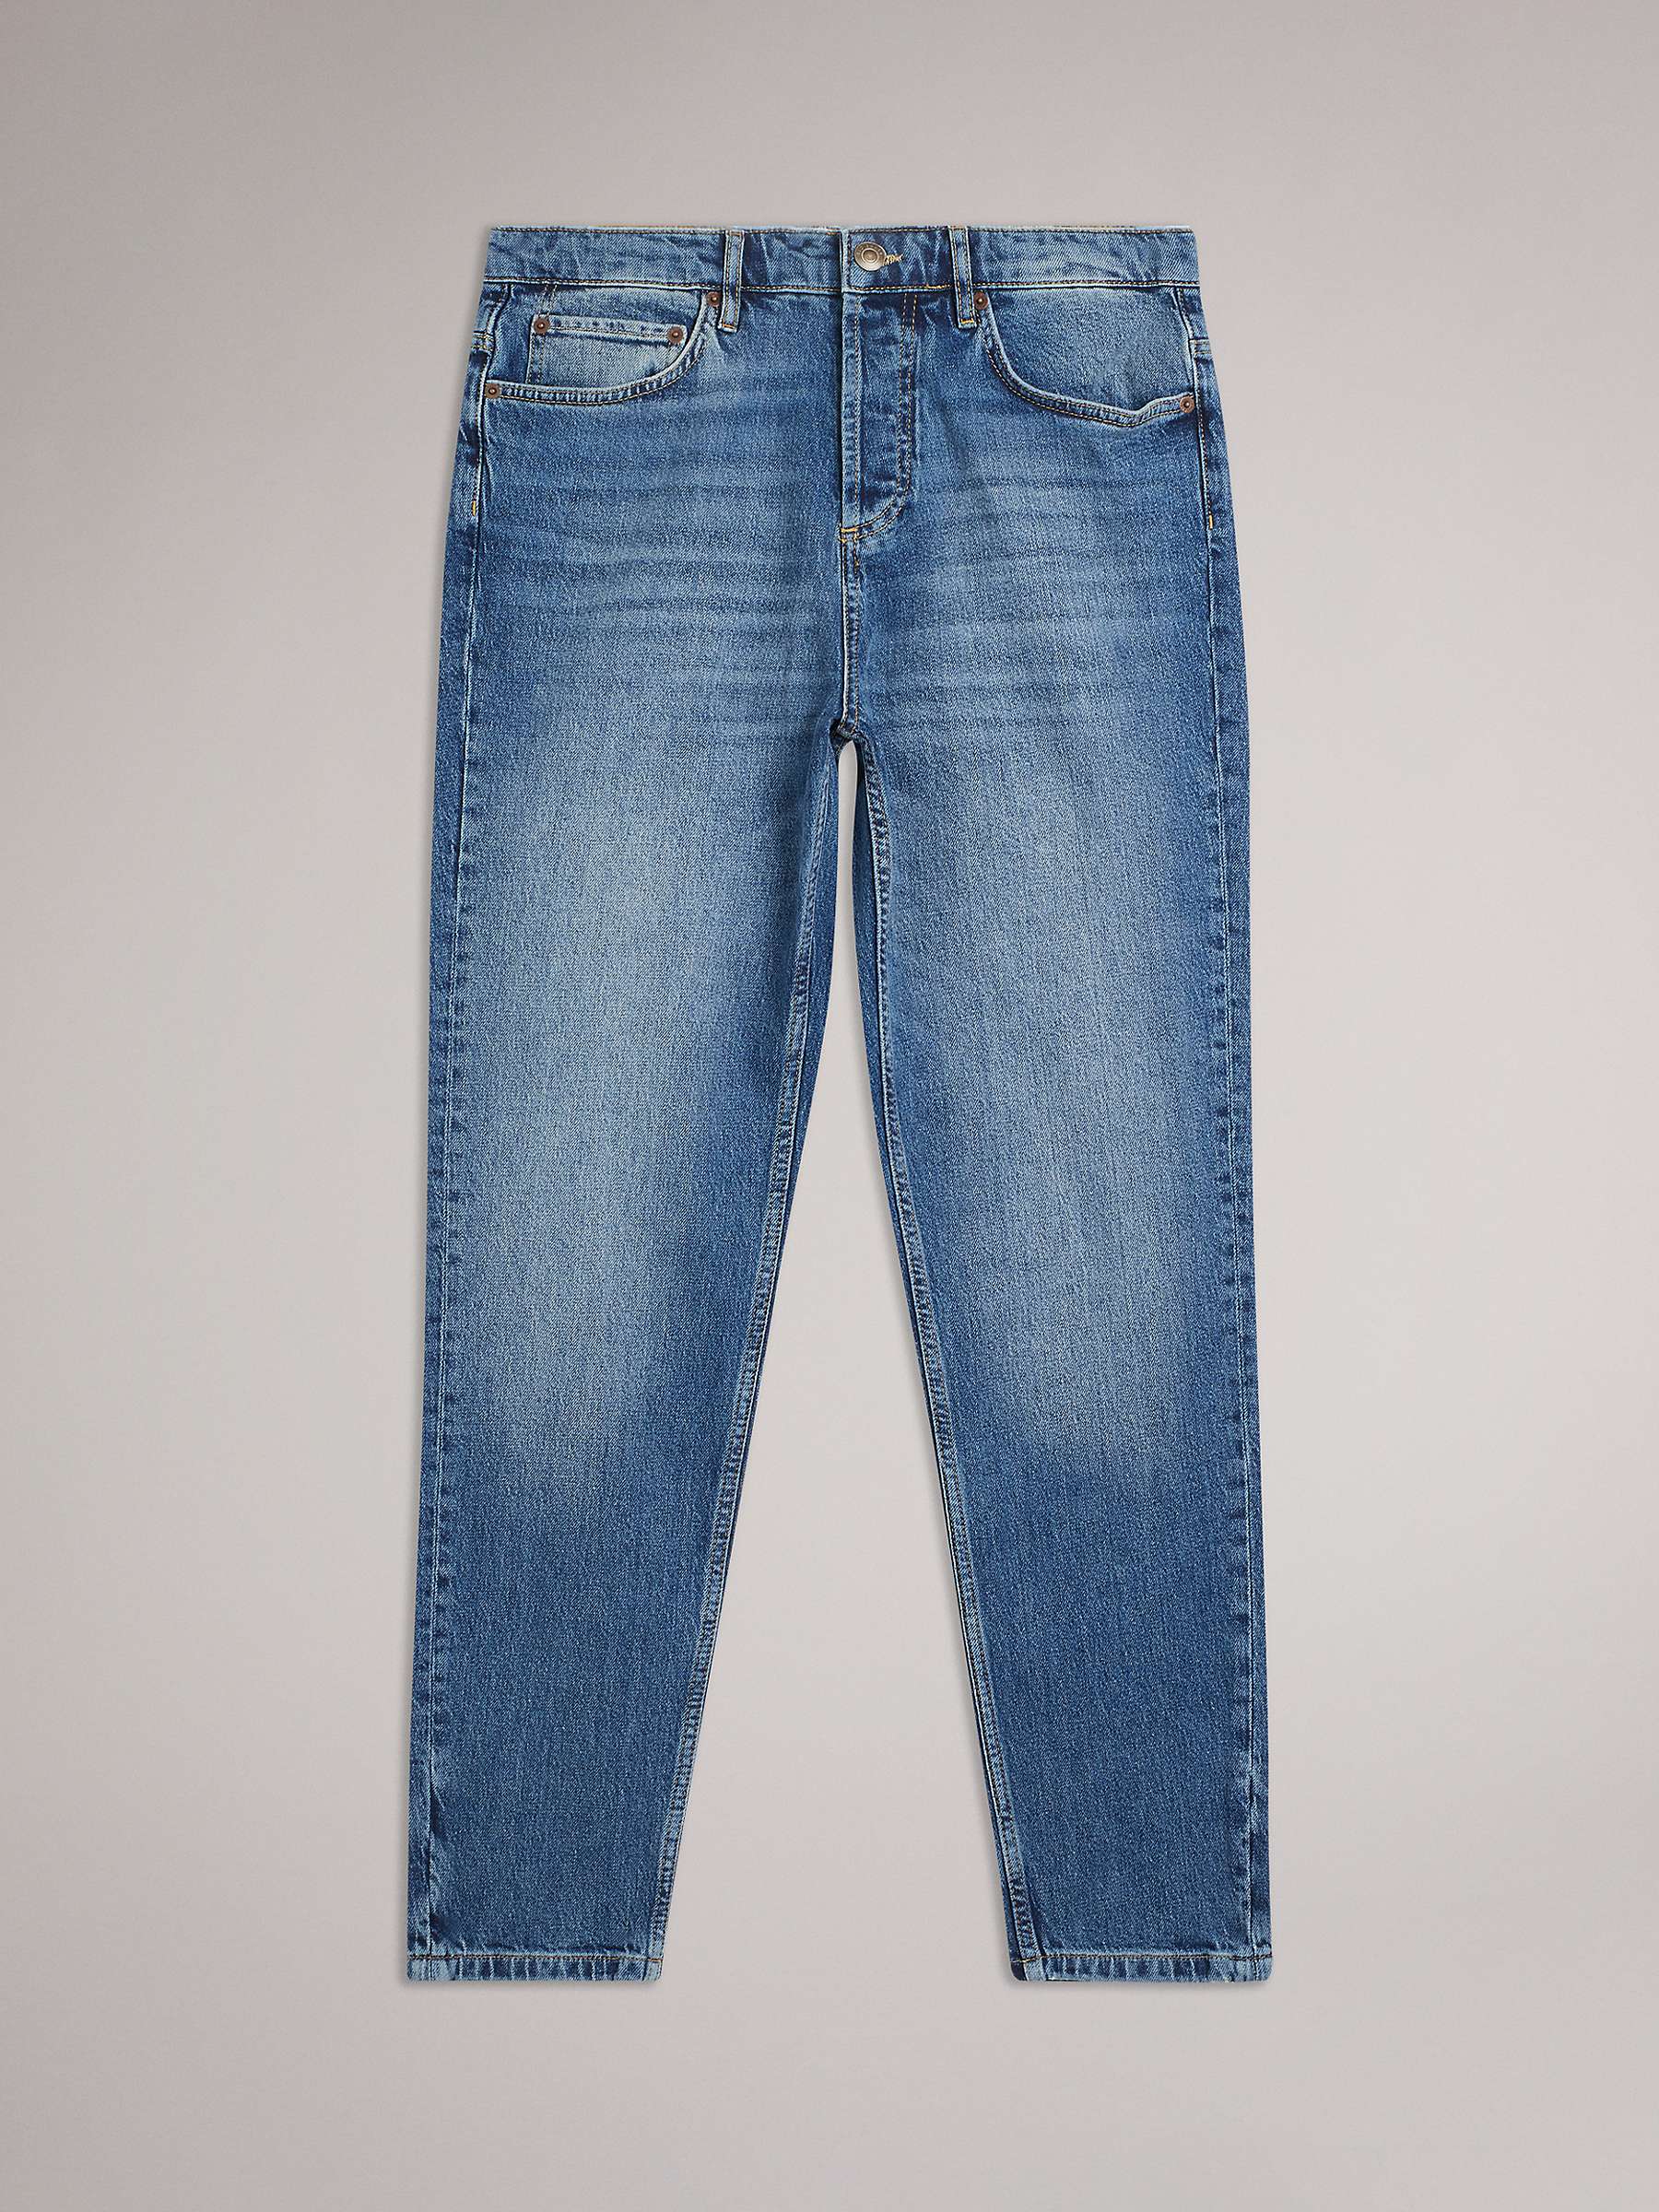 Buy Ted Baker Dyllon Tapered Fit Stretch Jeans, Dark Blue Online at johnlewis.com